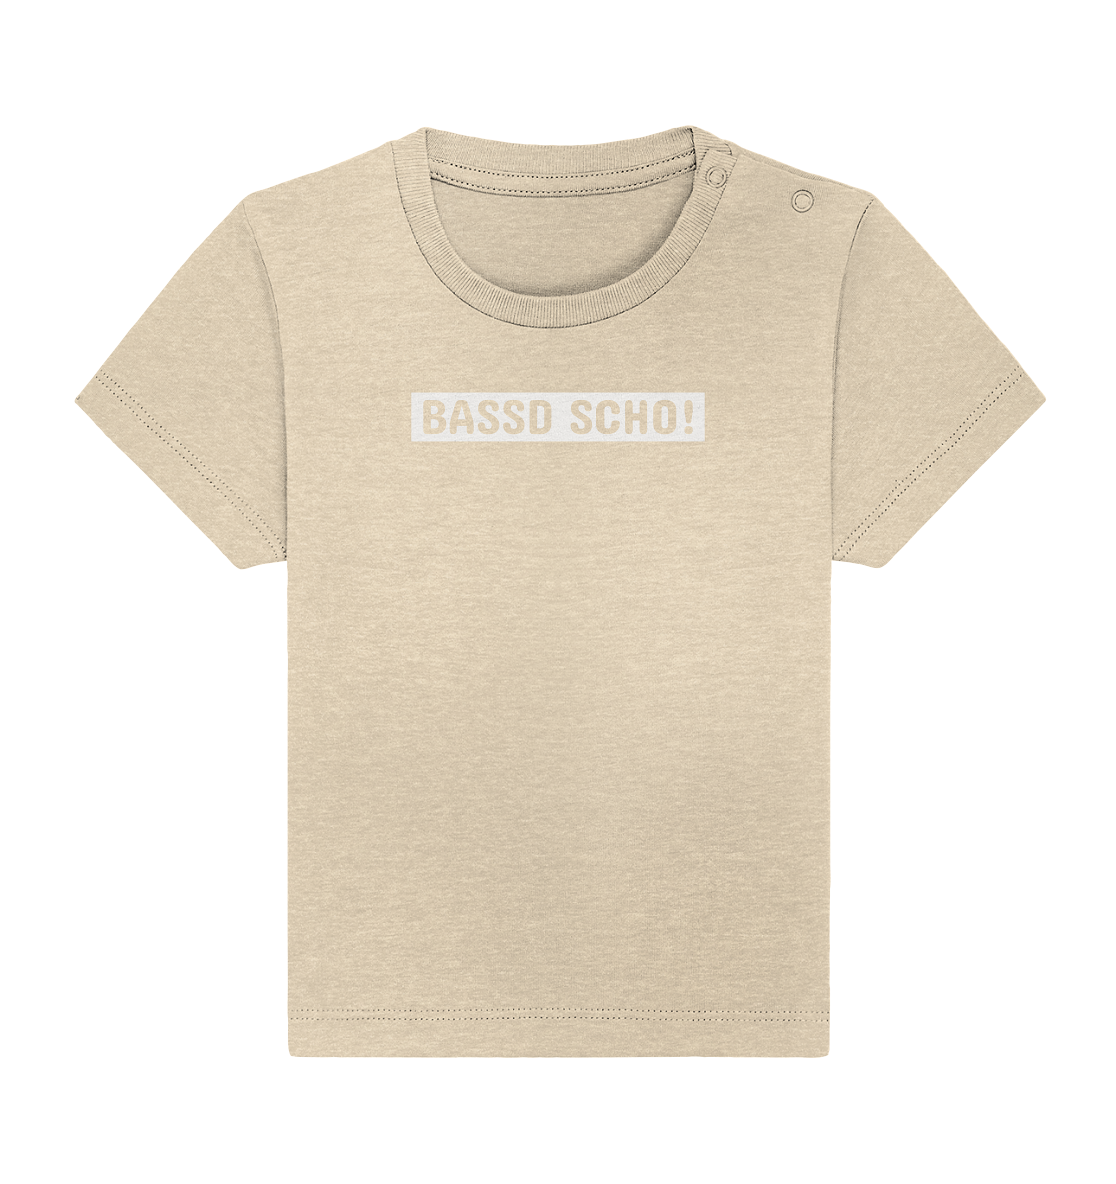 #BABY - BASSD SCHO! - Baby Organic Shirt